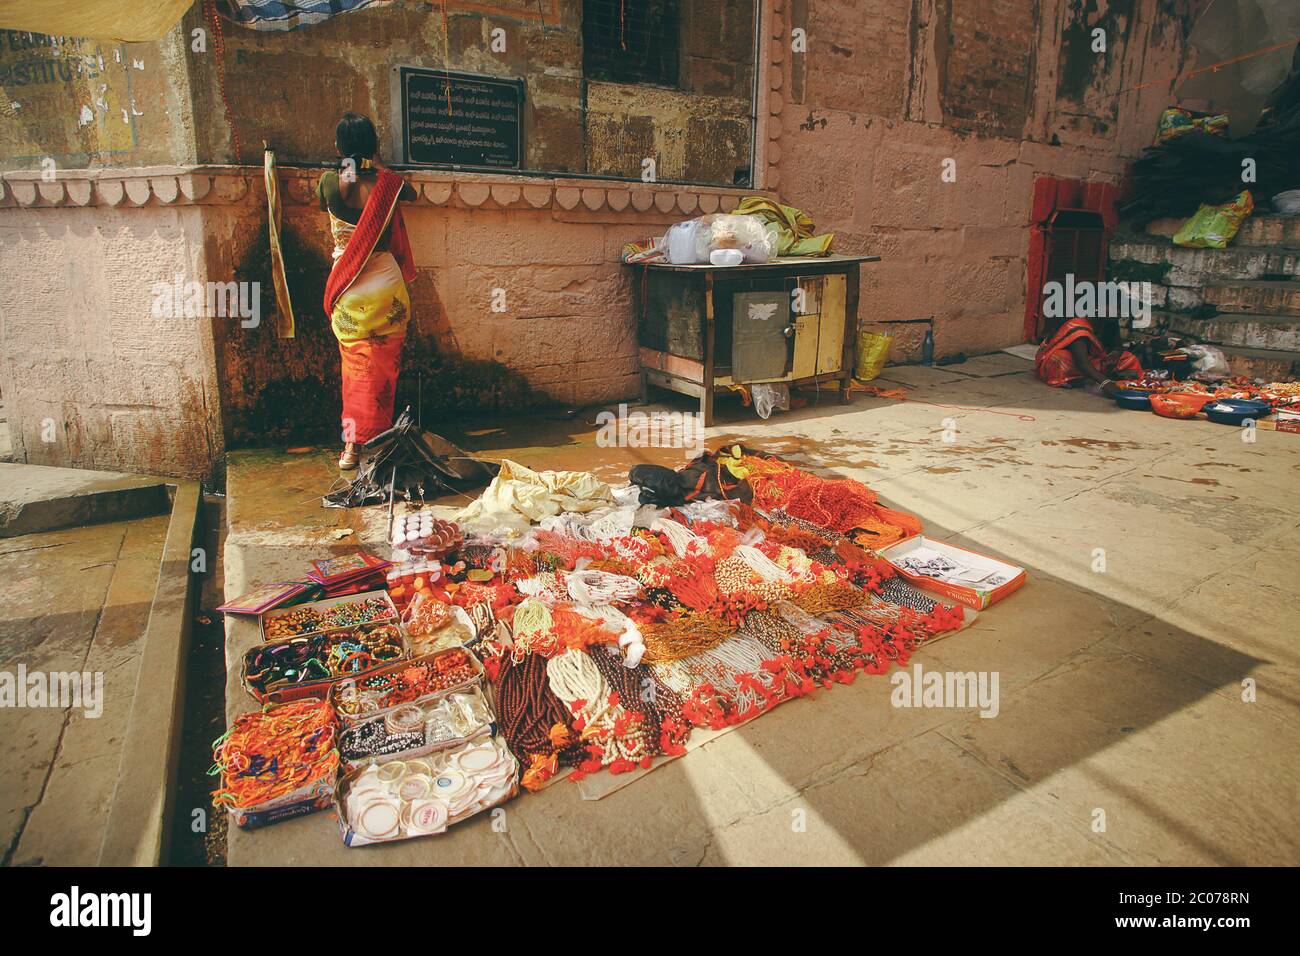 Indian woman selling some stuff Varanasi India. Stock Photo